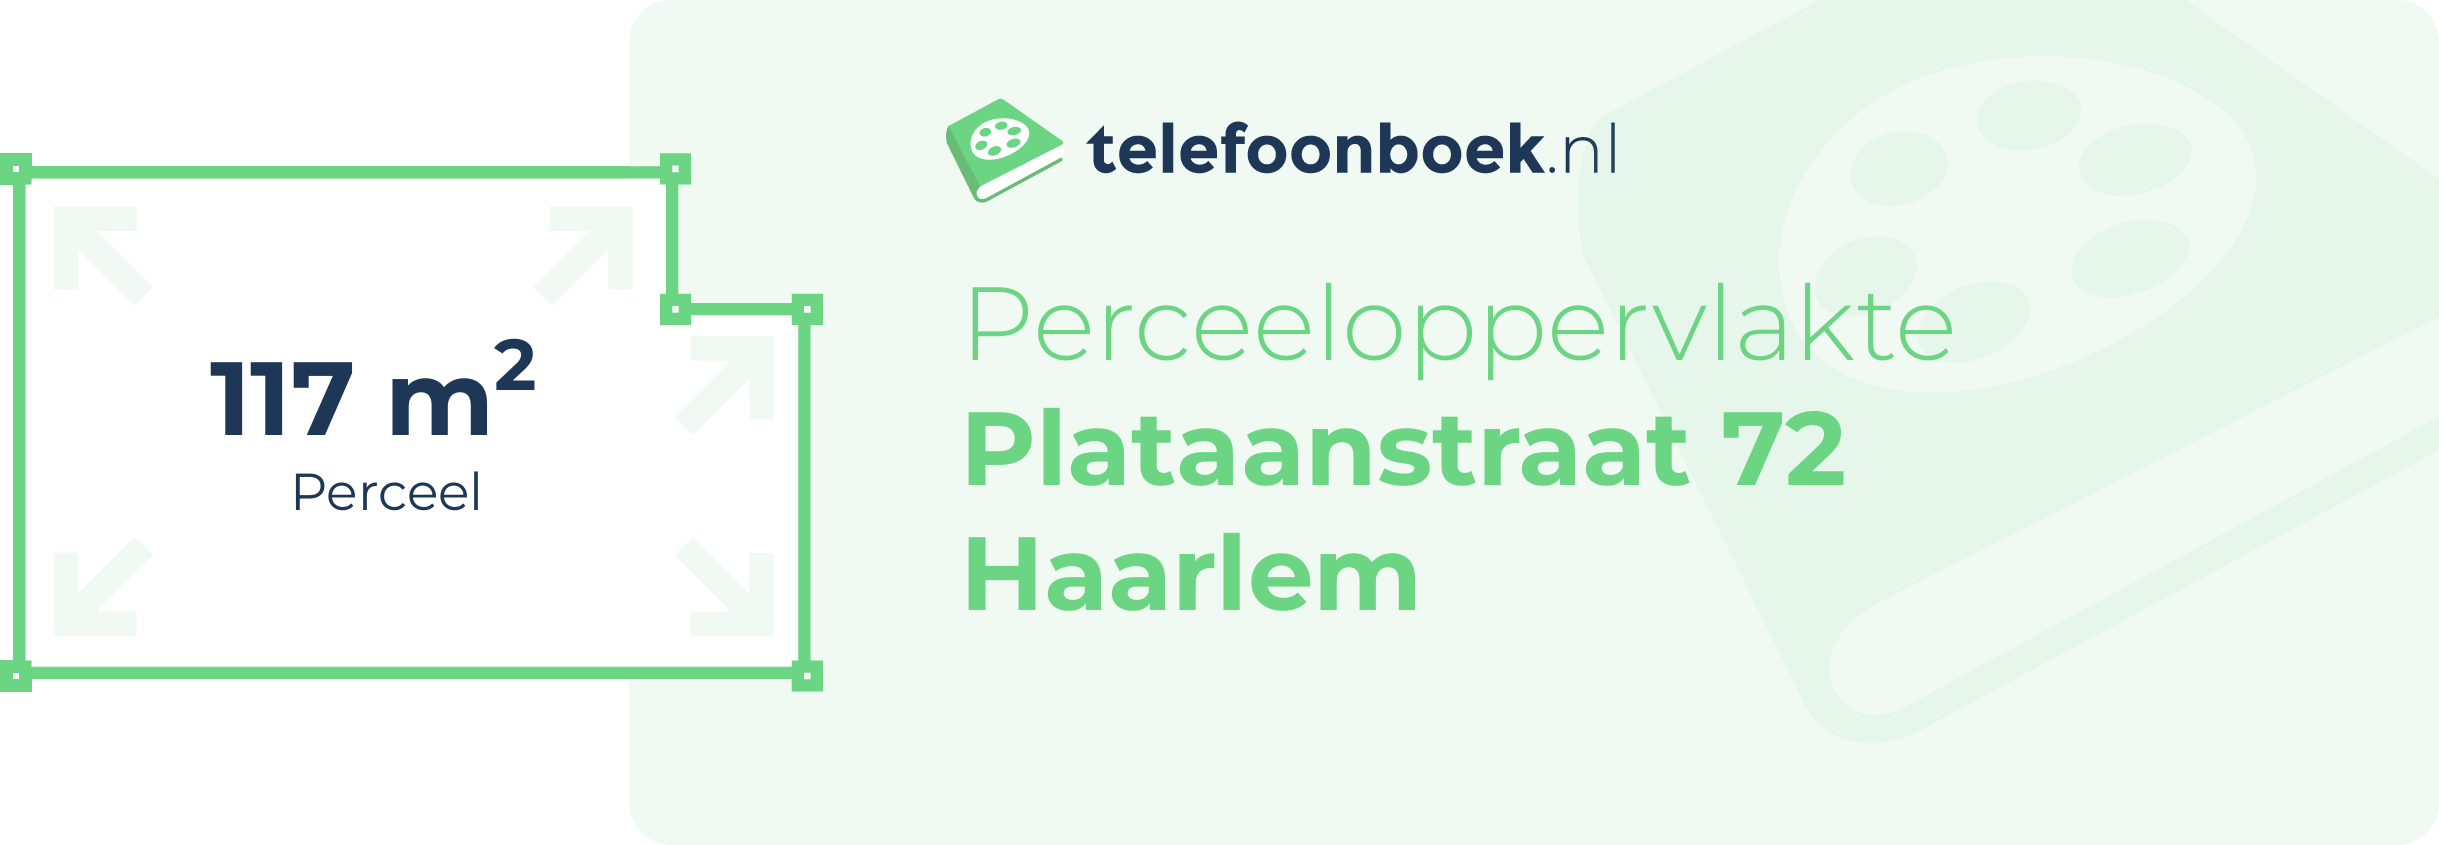 Perceeloppervlakte Plataanstraat 72 Haarlem